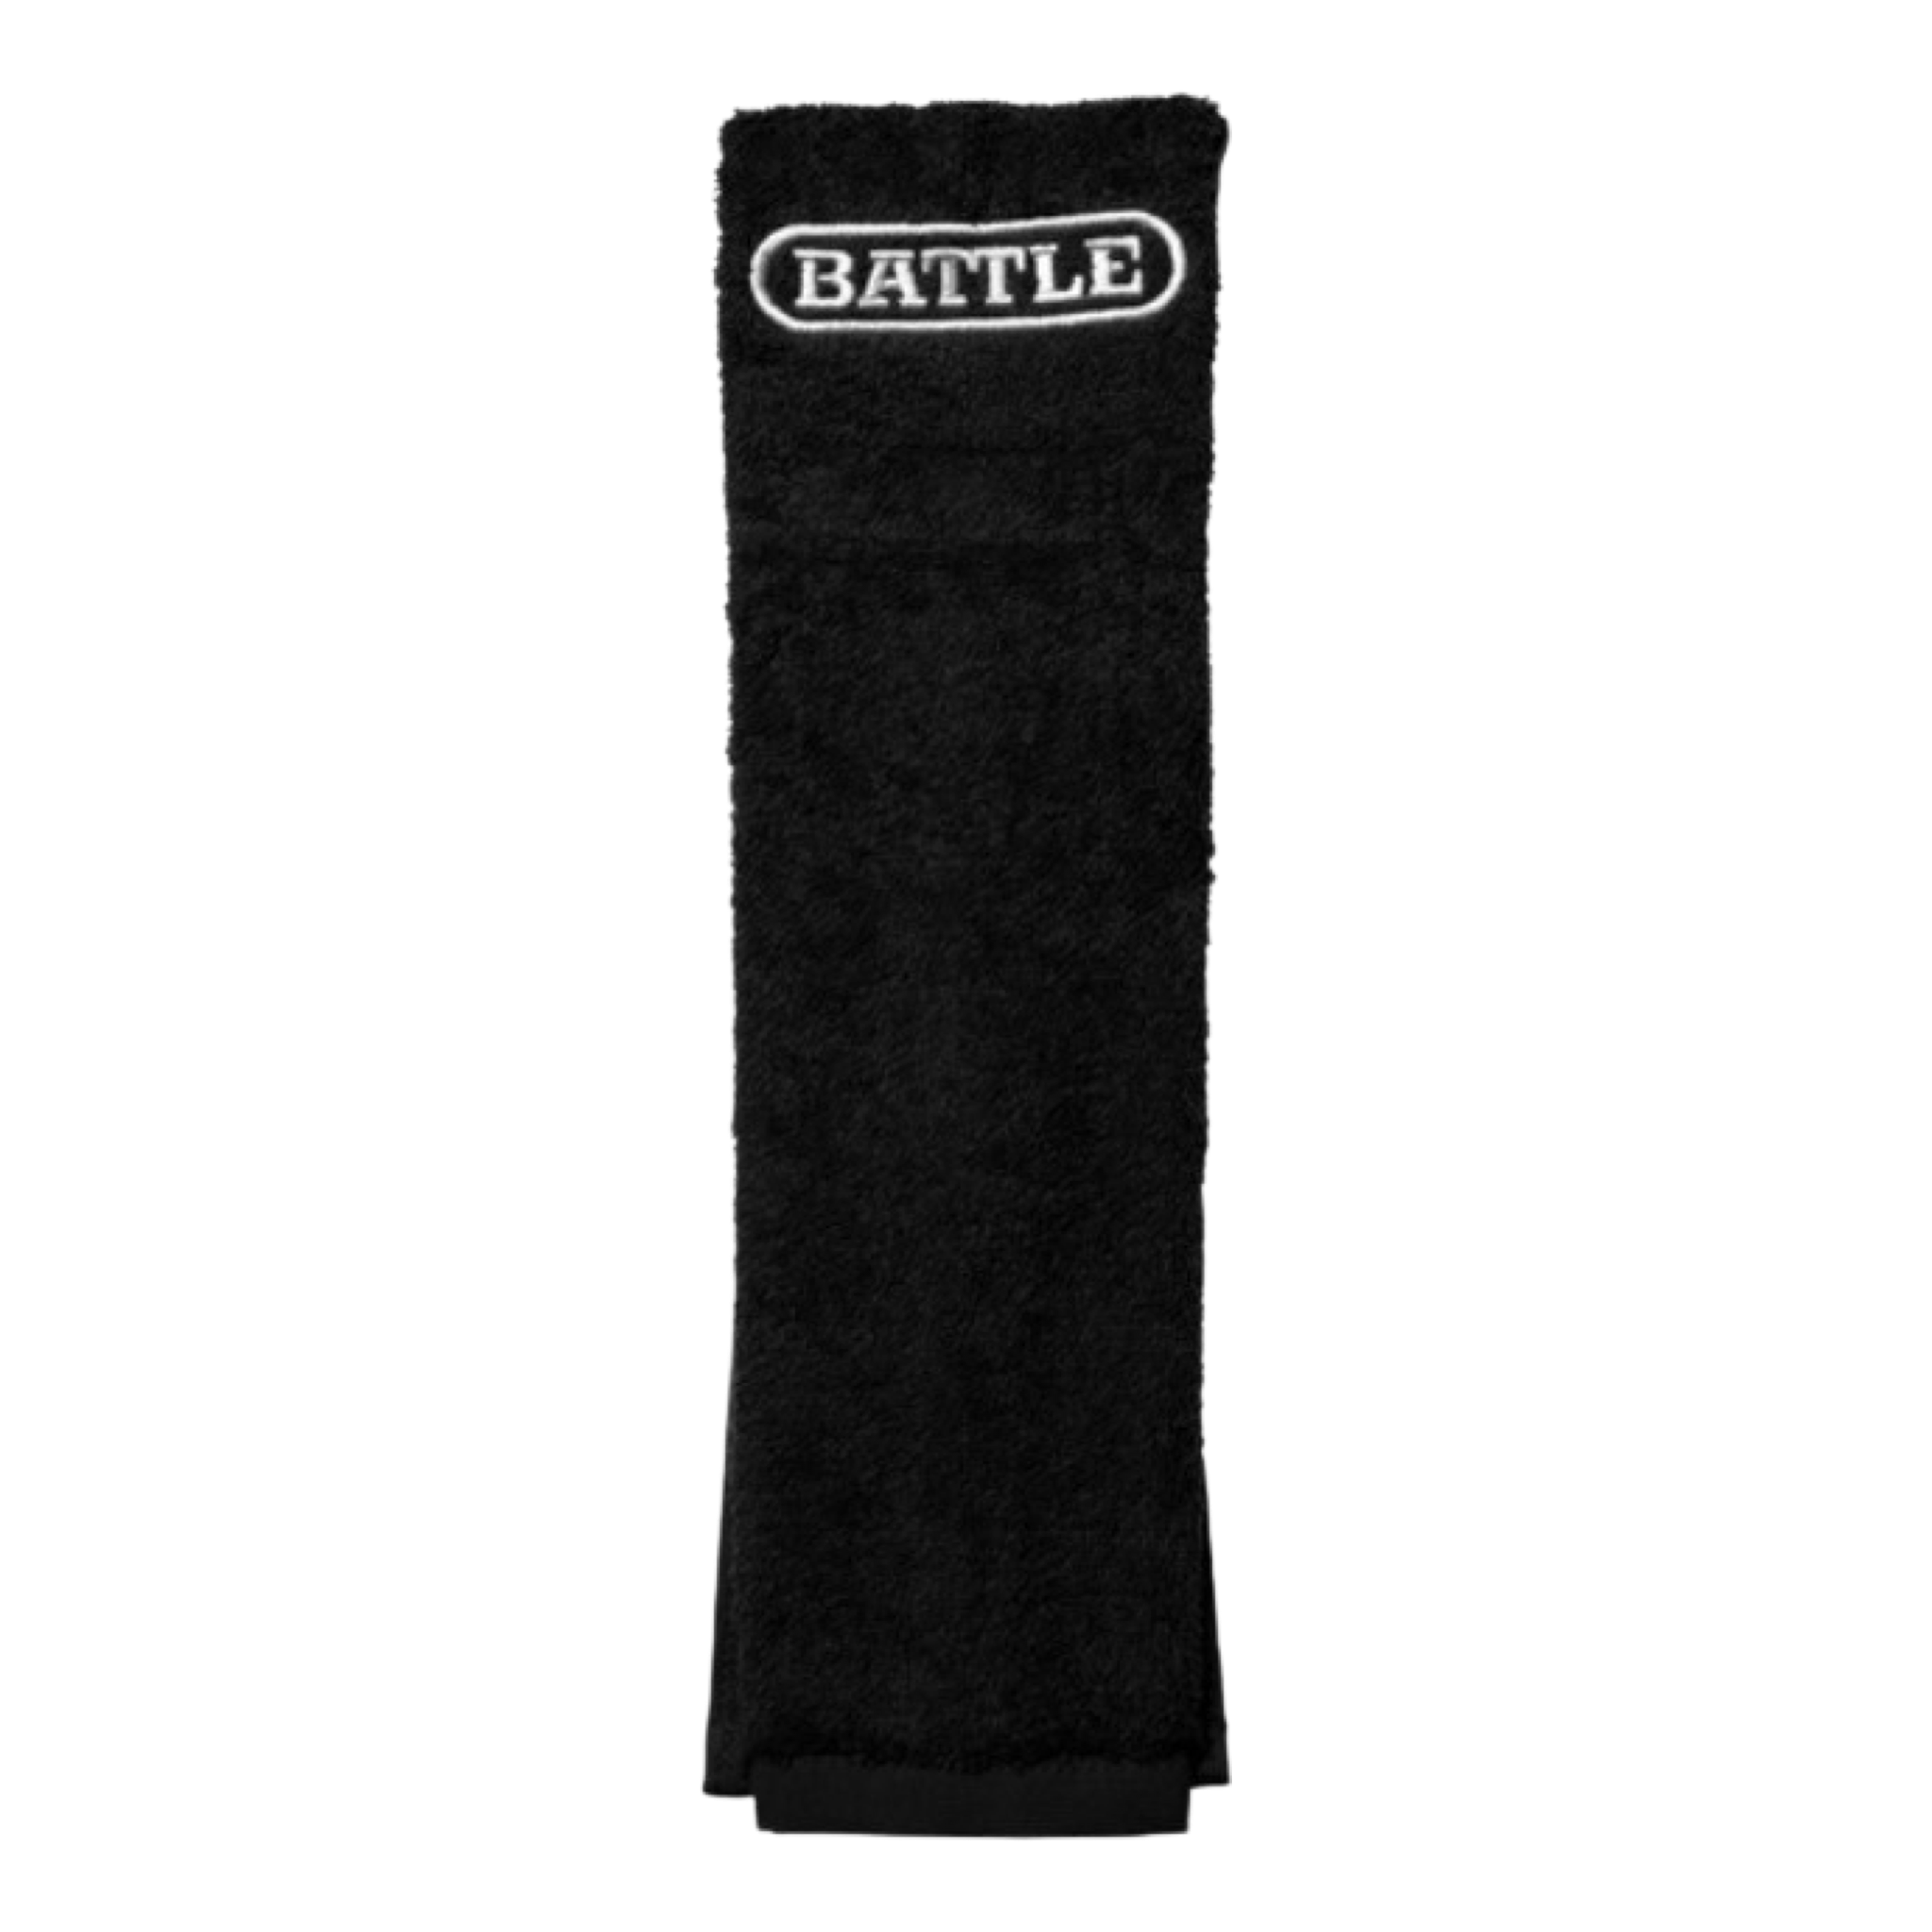 Battle Towel / Towel